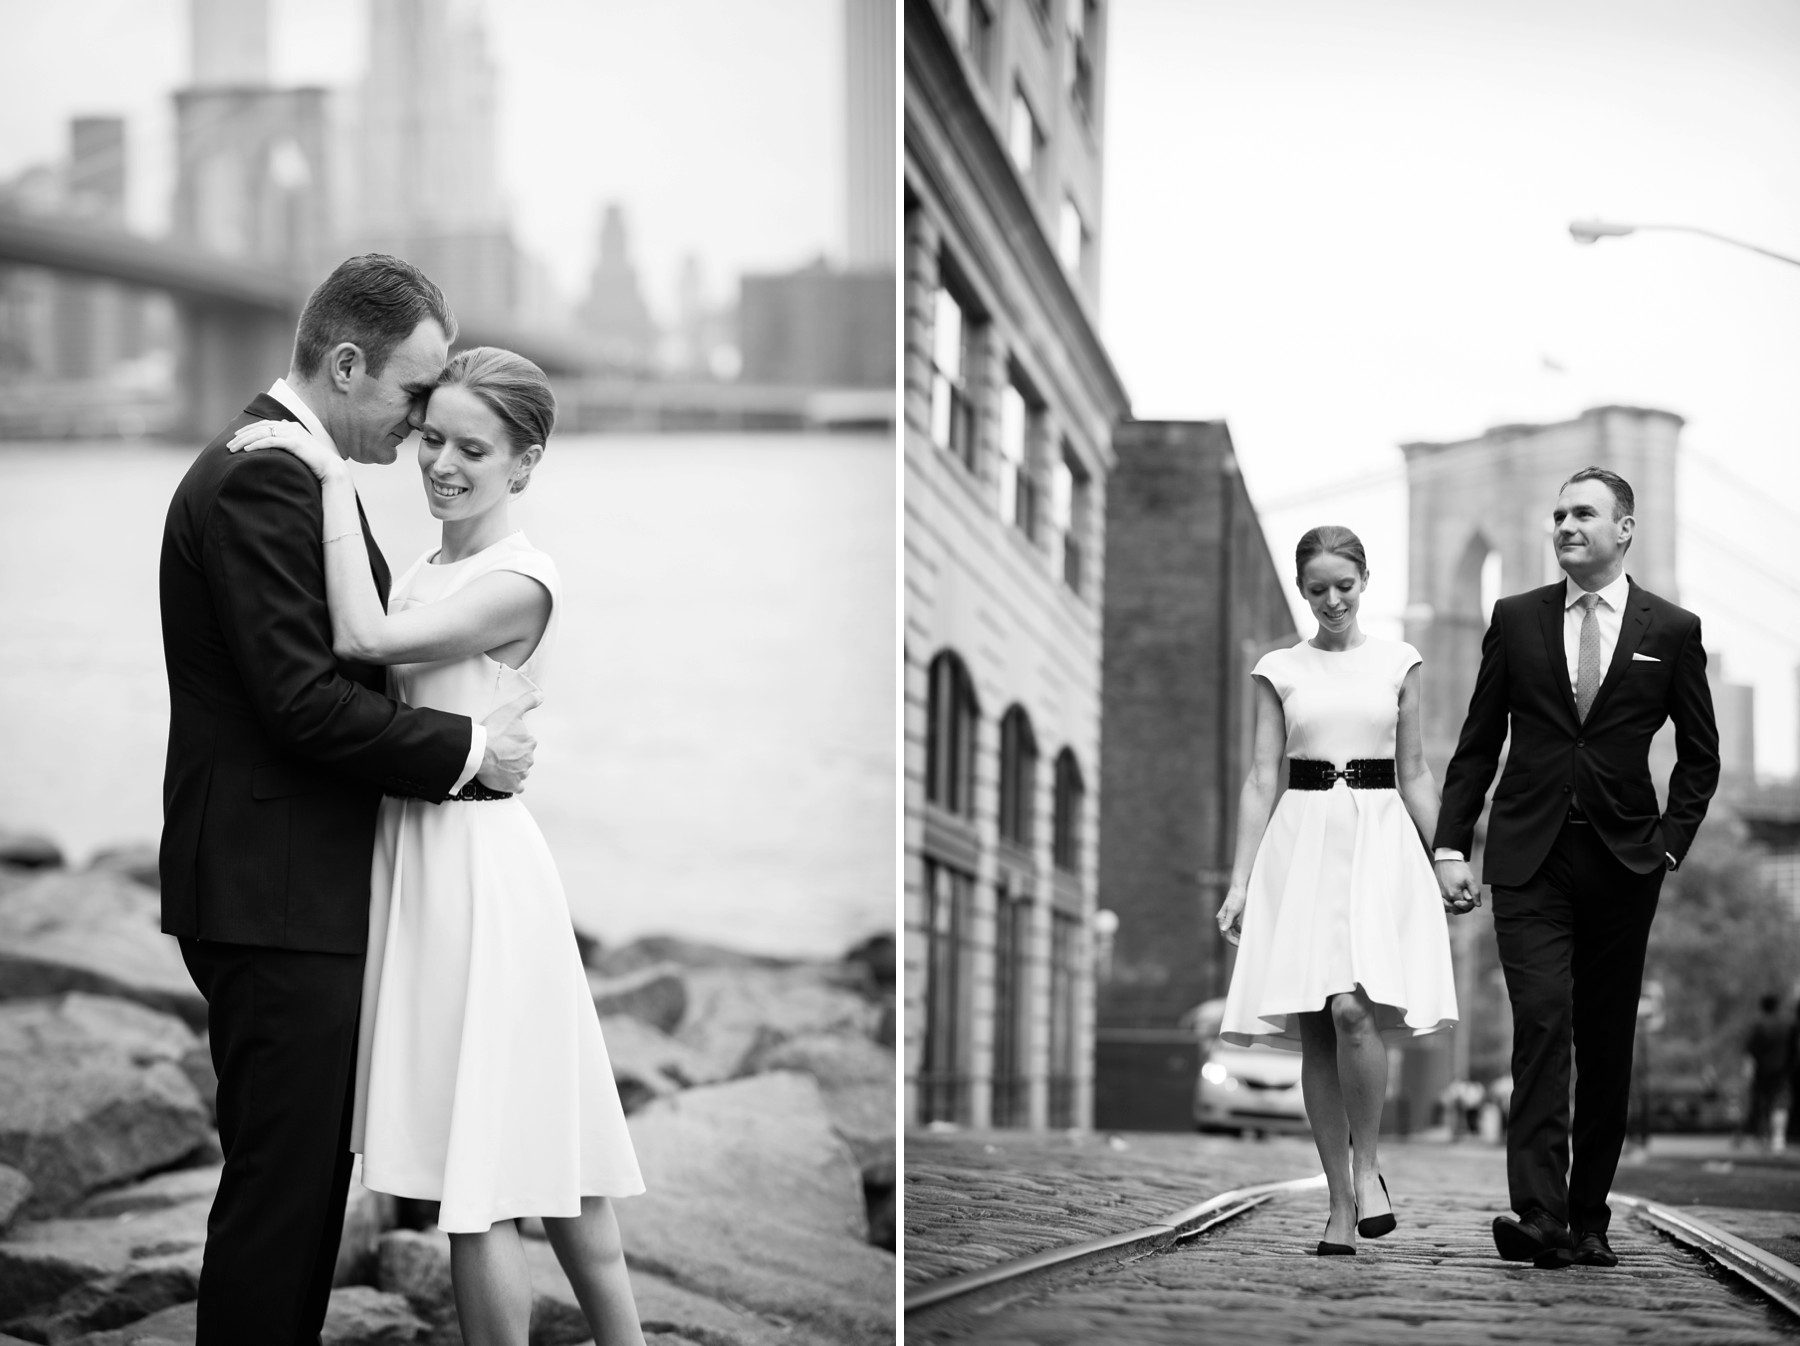 new york elopement sascha reinking photography cobble stone street